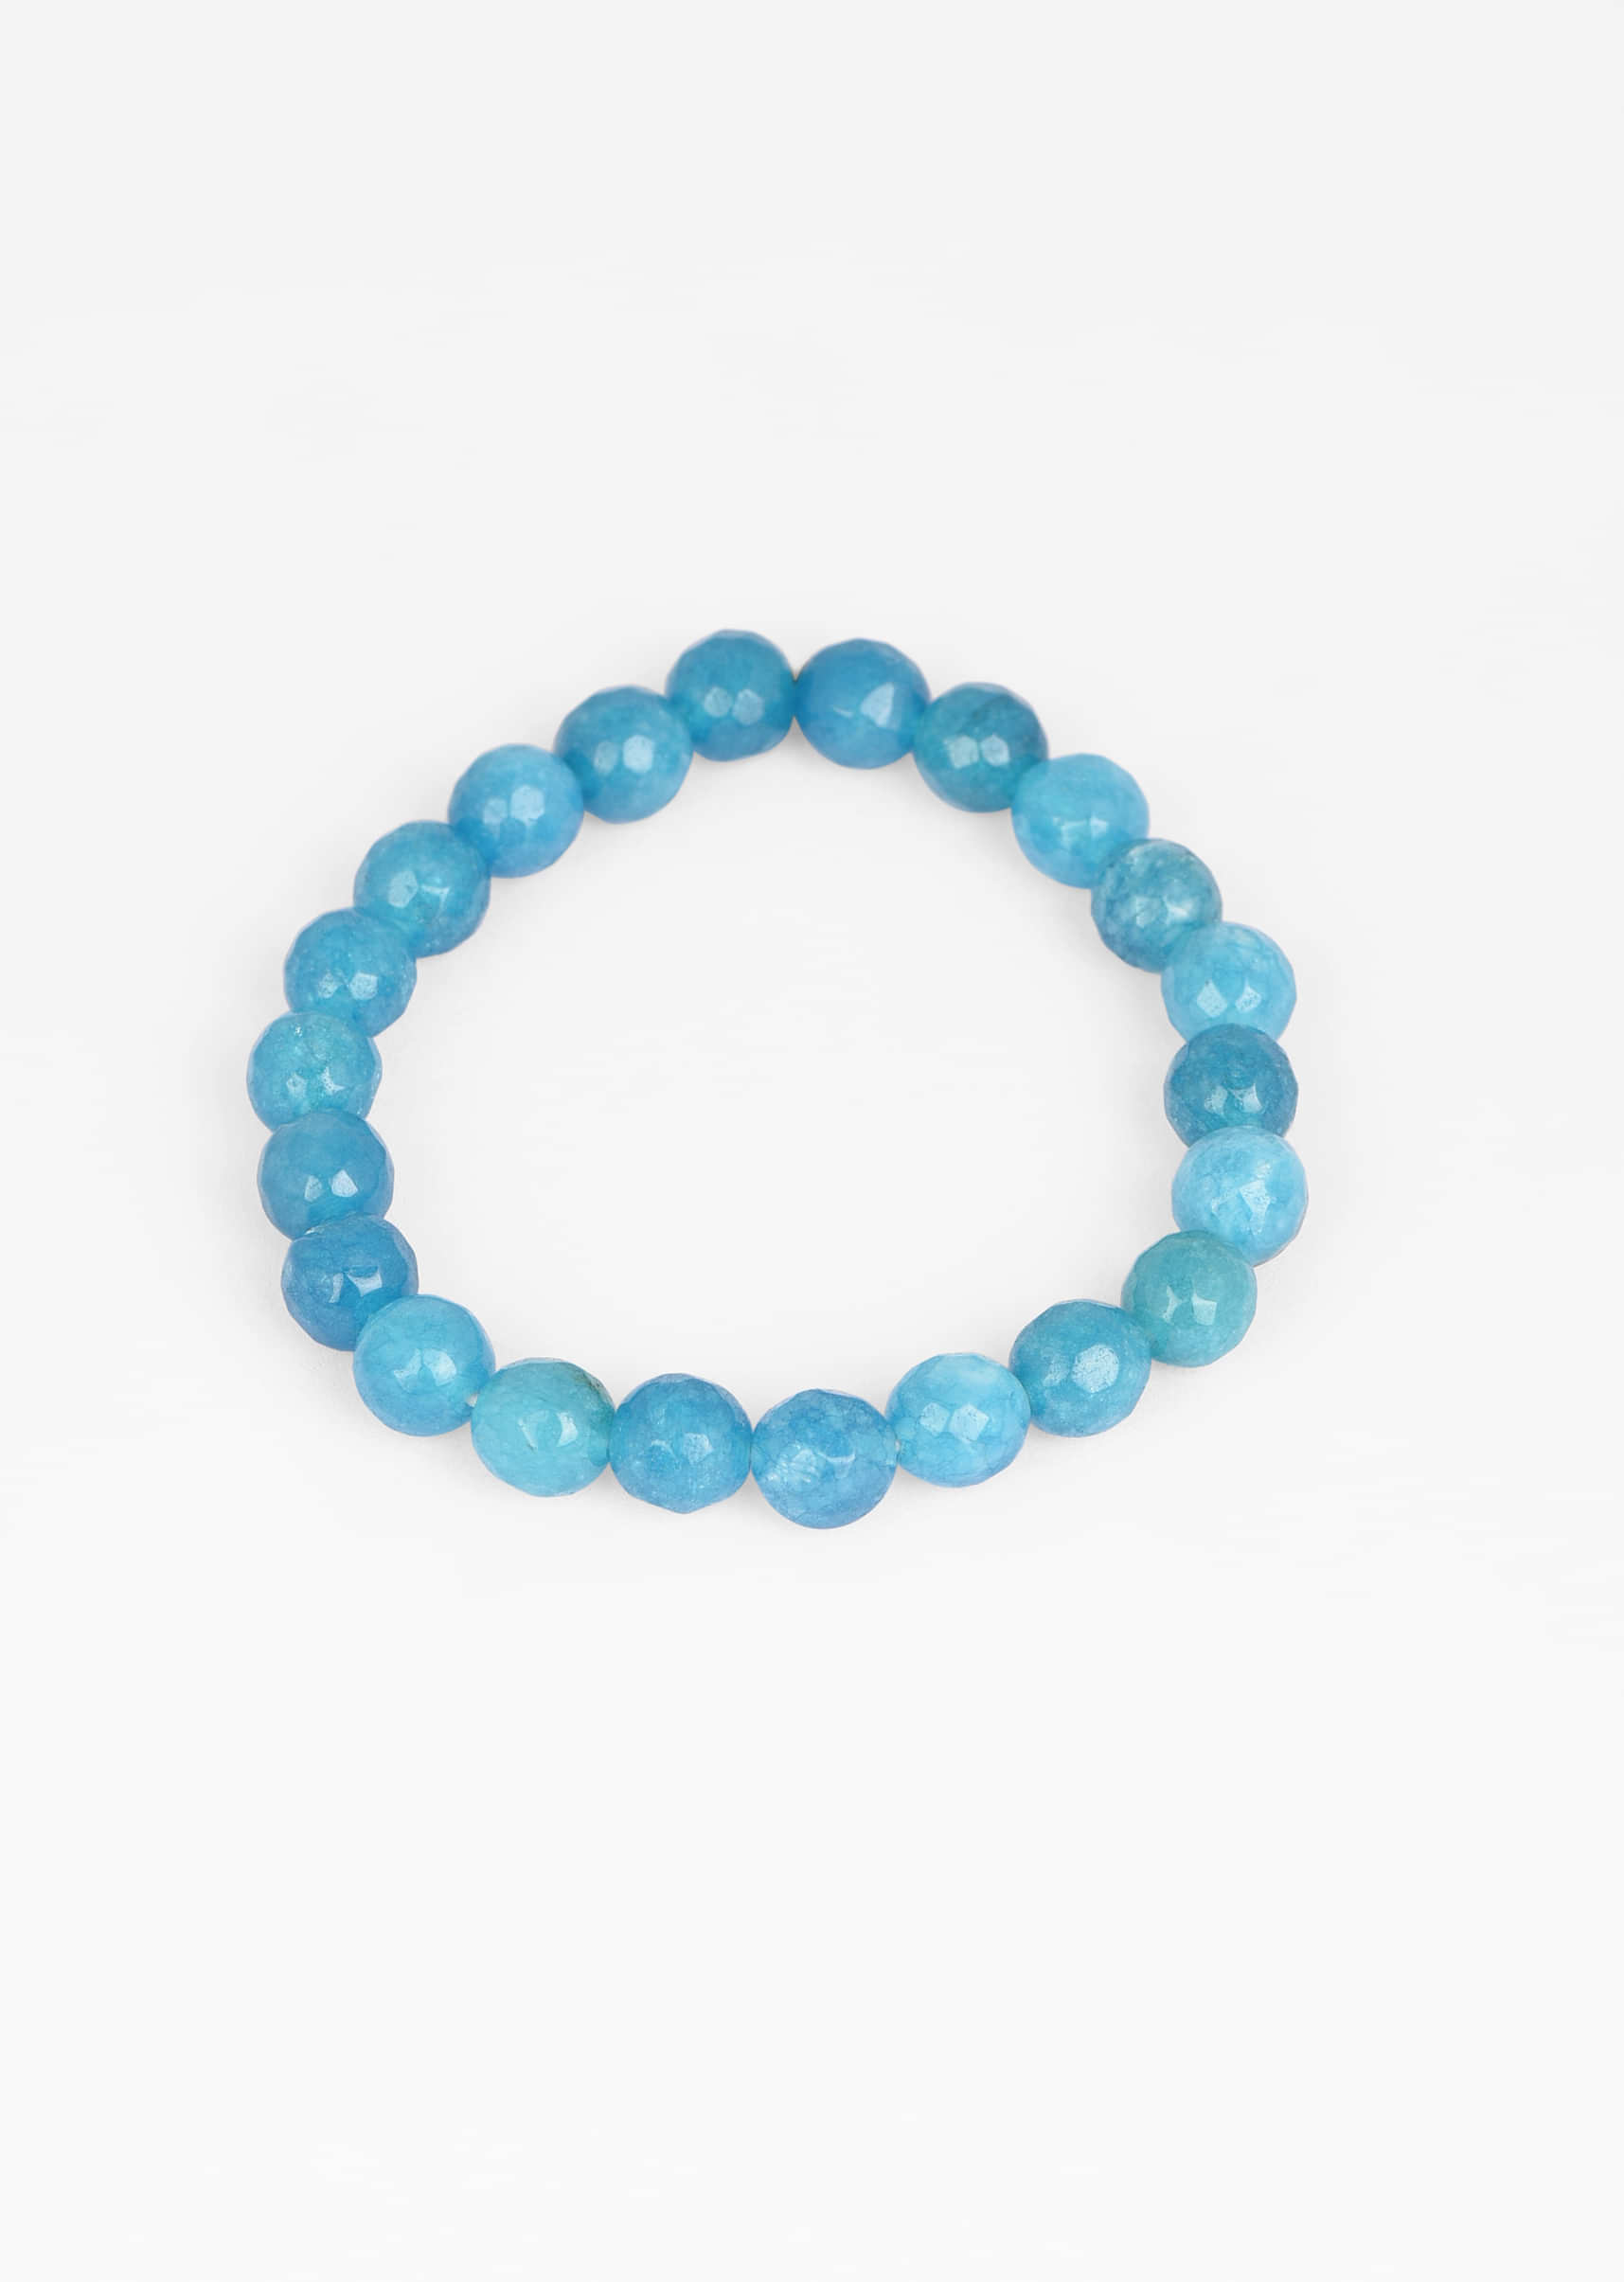 Blue Semi Precious Stone Beads Threaded Bracelet 